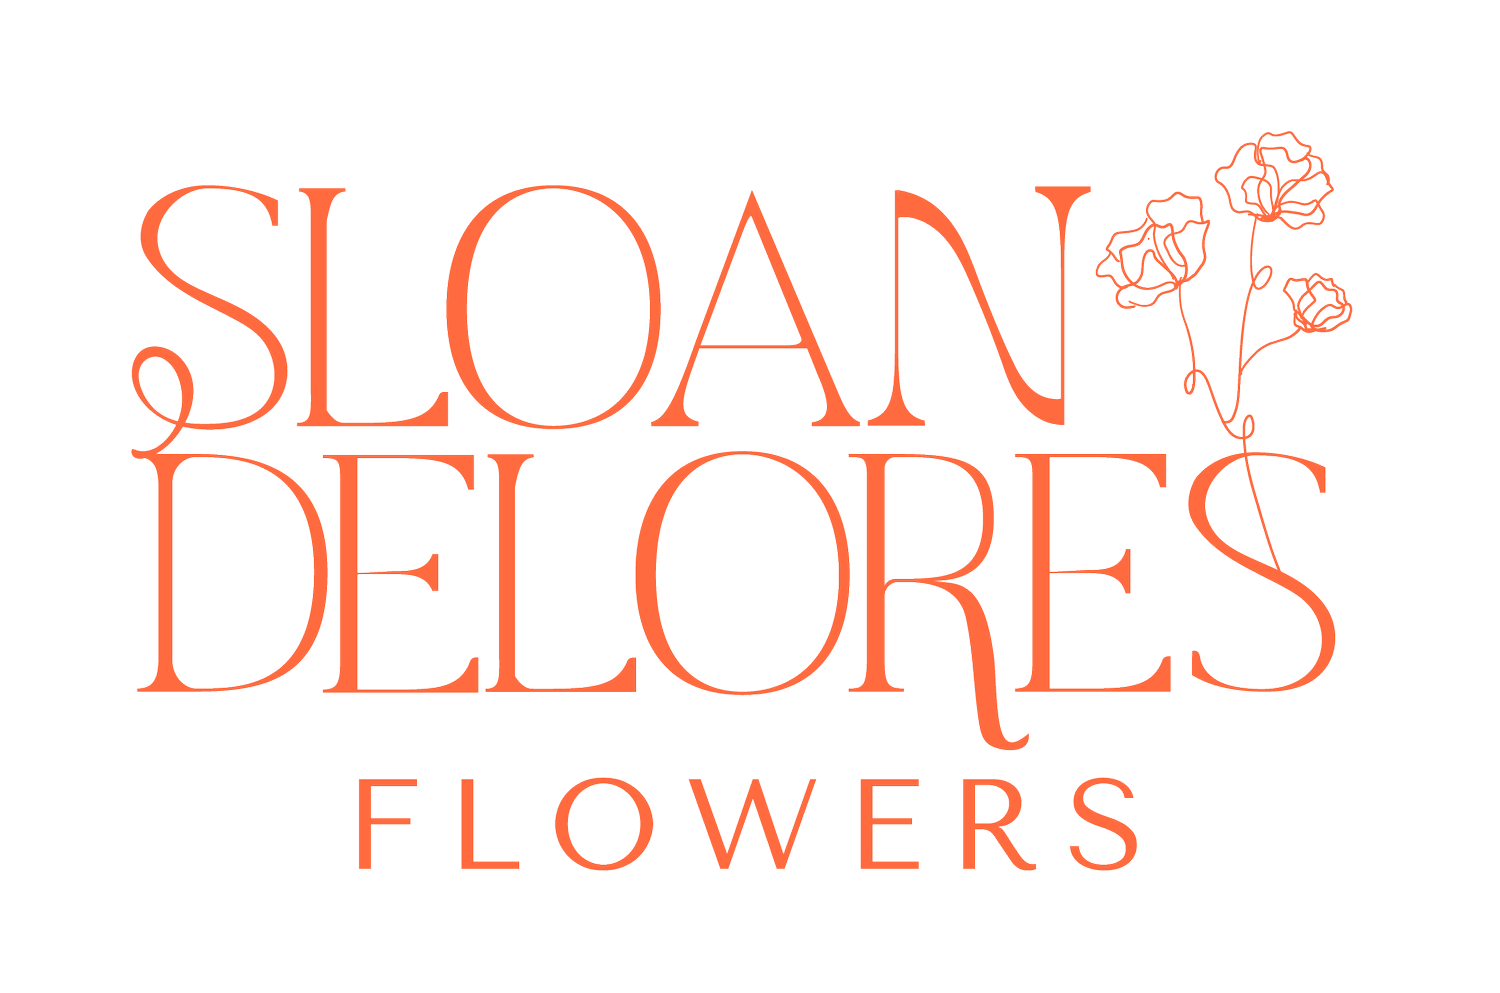 Sloan Delores Flowers